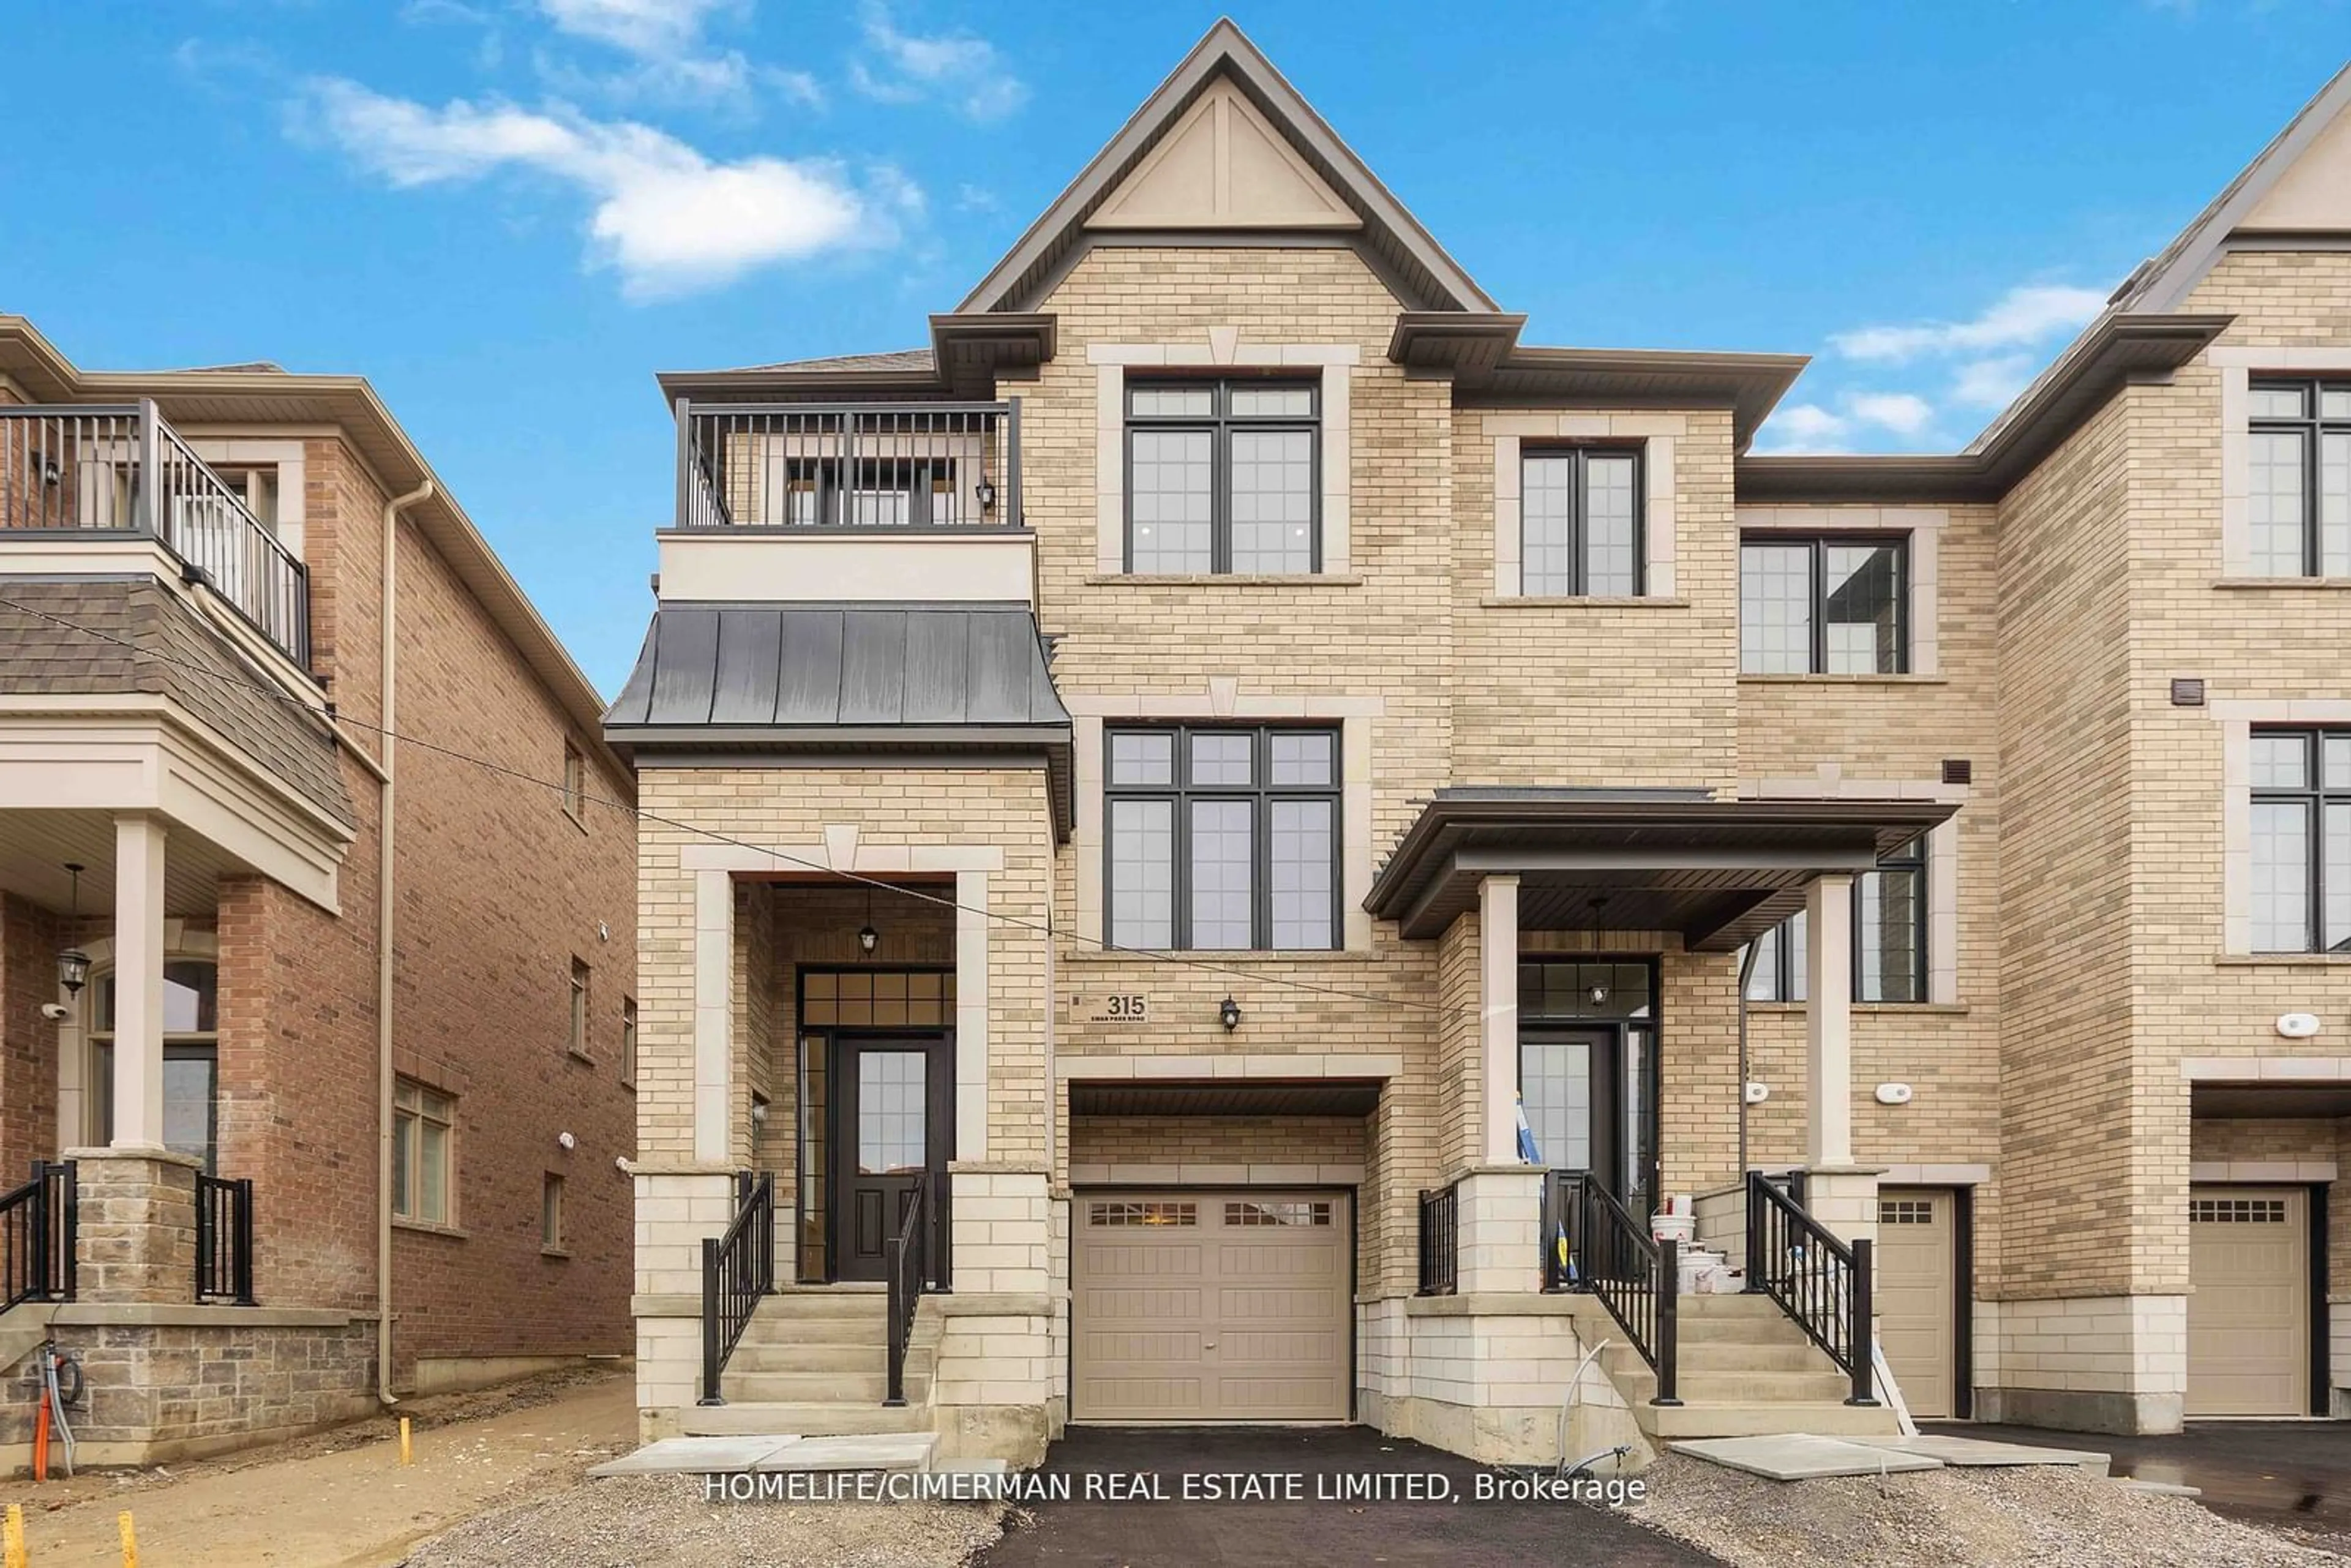 Home with brick exterior material for 315 Swan Park Rd, Markham Ontario L6E 0H3